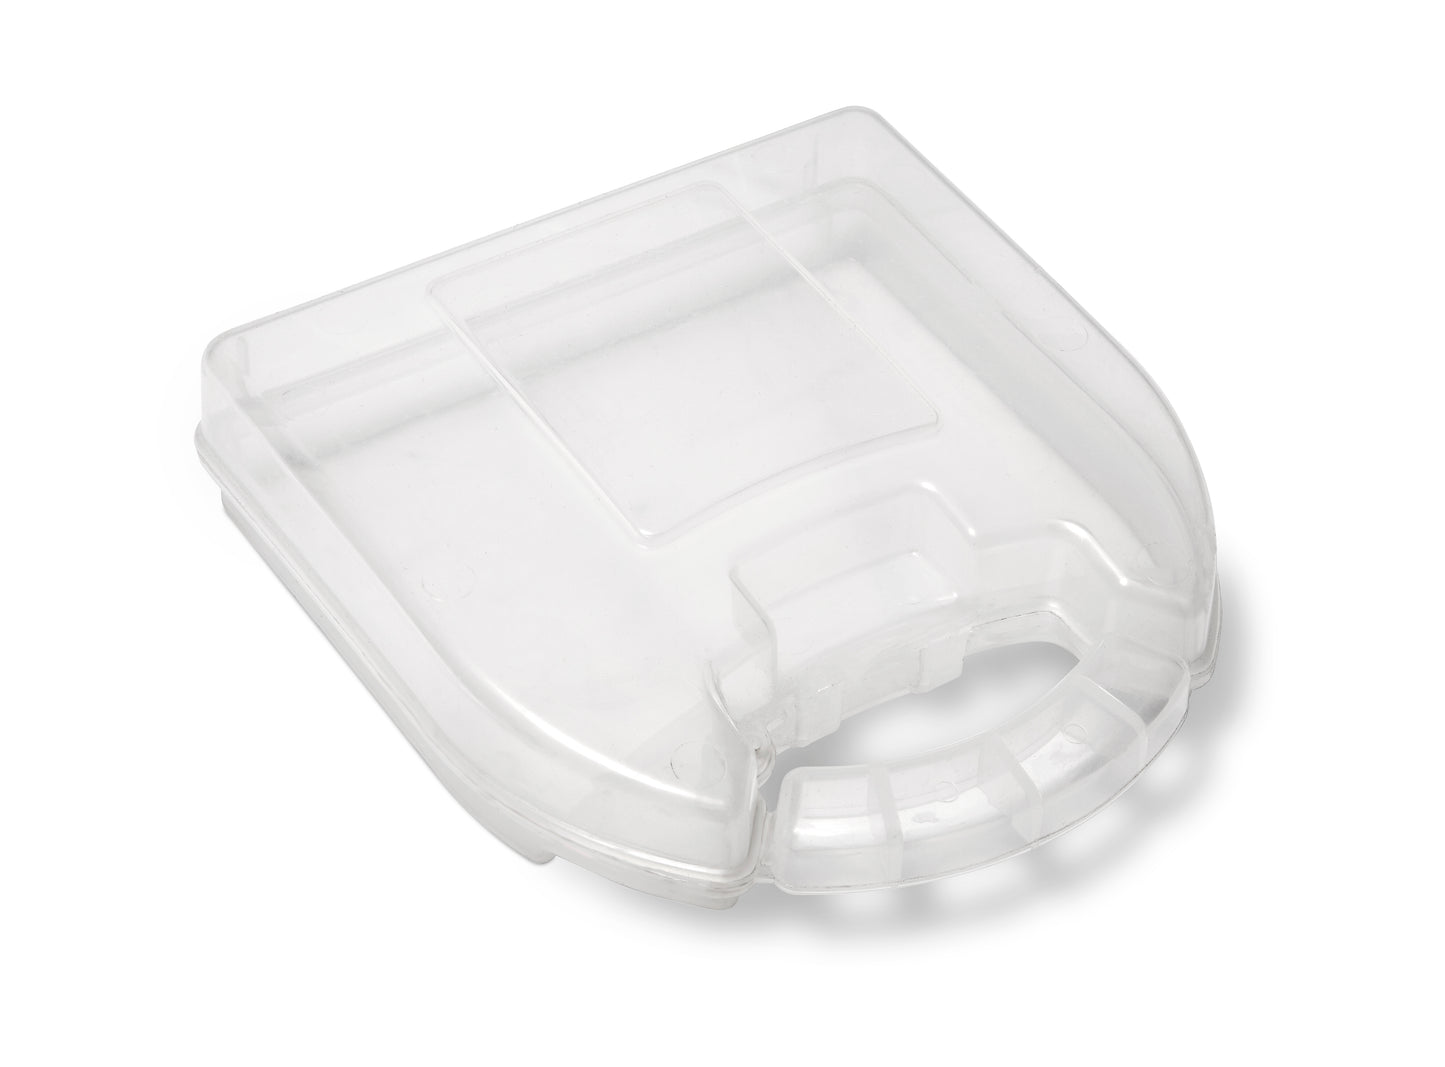 Plastic Clear Storage Case (50x185x145mm internal) - Etree - Etree - Tool Storage & Organization